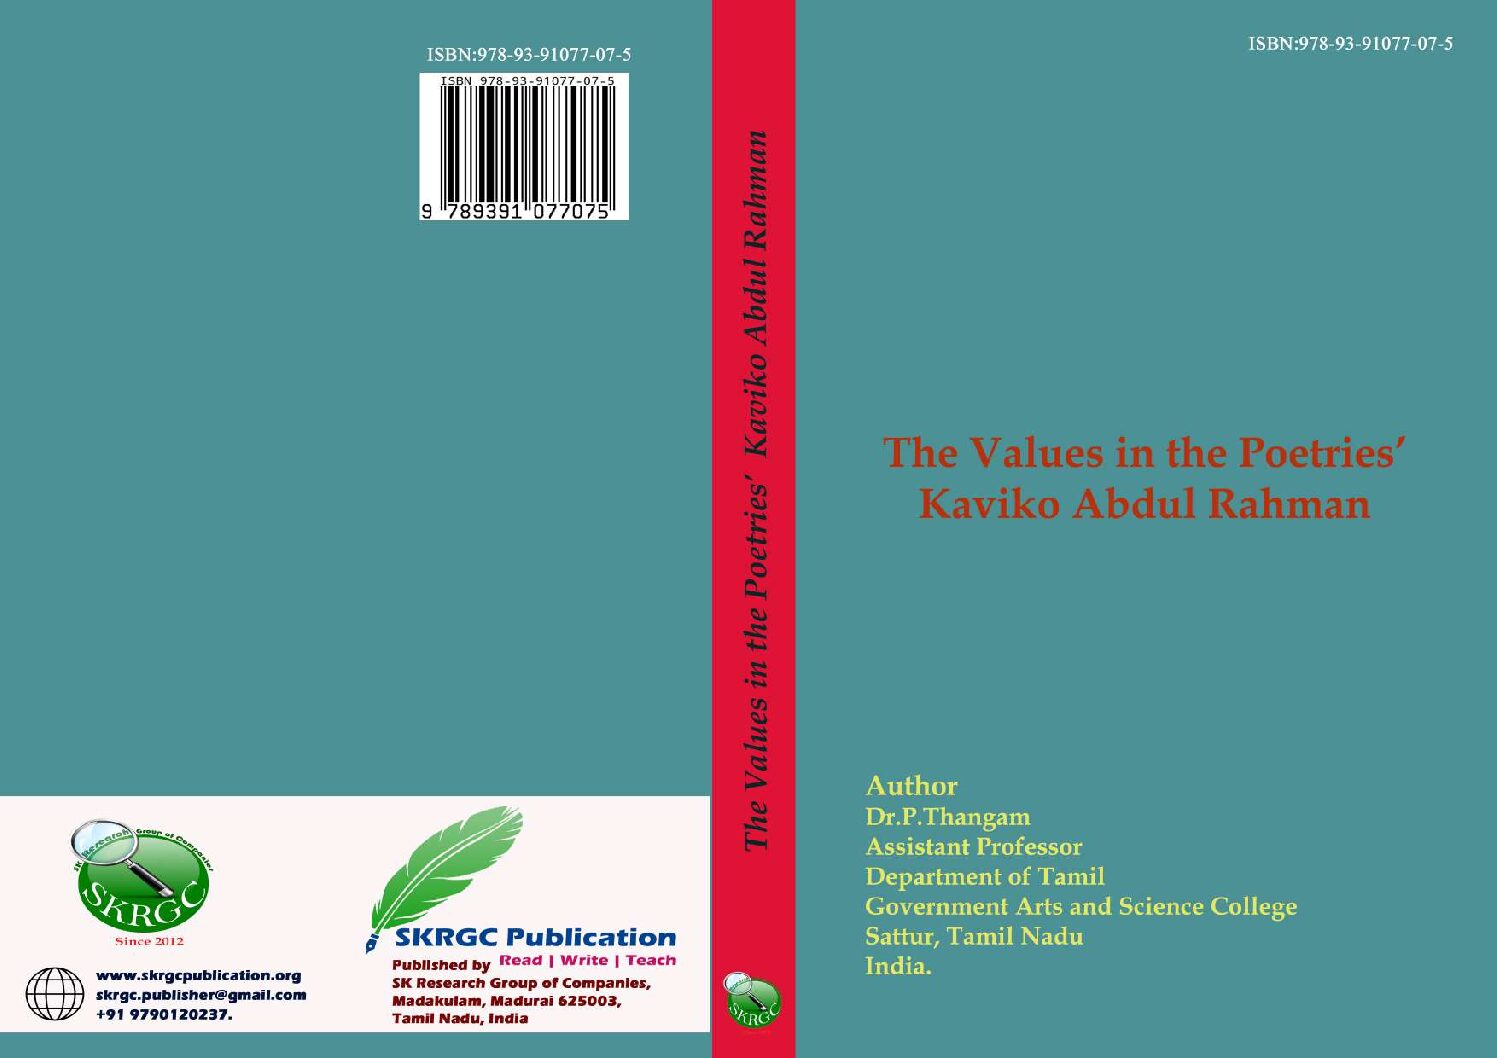 The Values in the Poetries’ Kaviko Abdual Rahuman